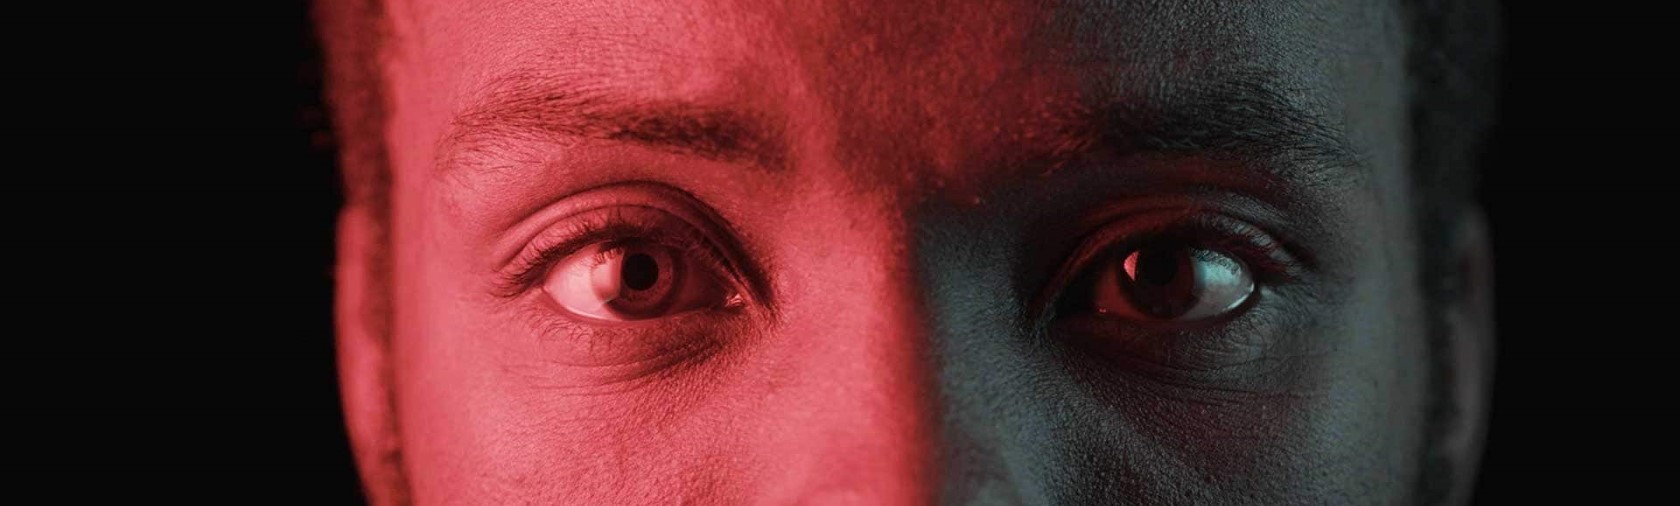 Closeup of Black man's eye